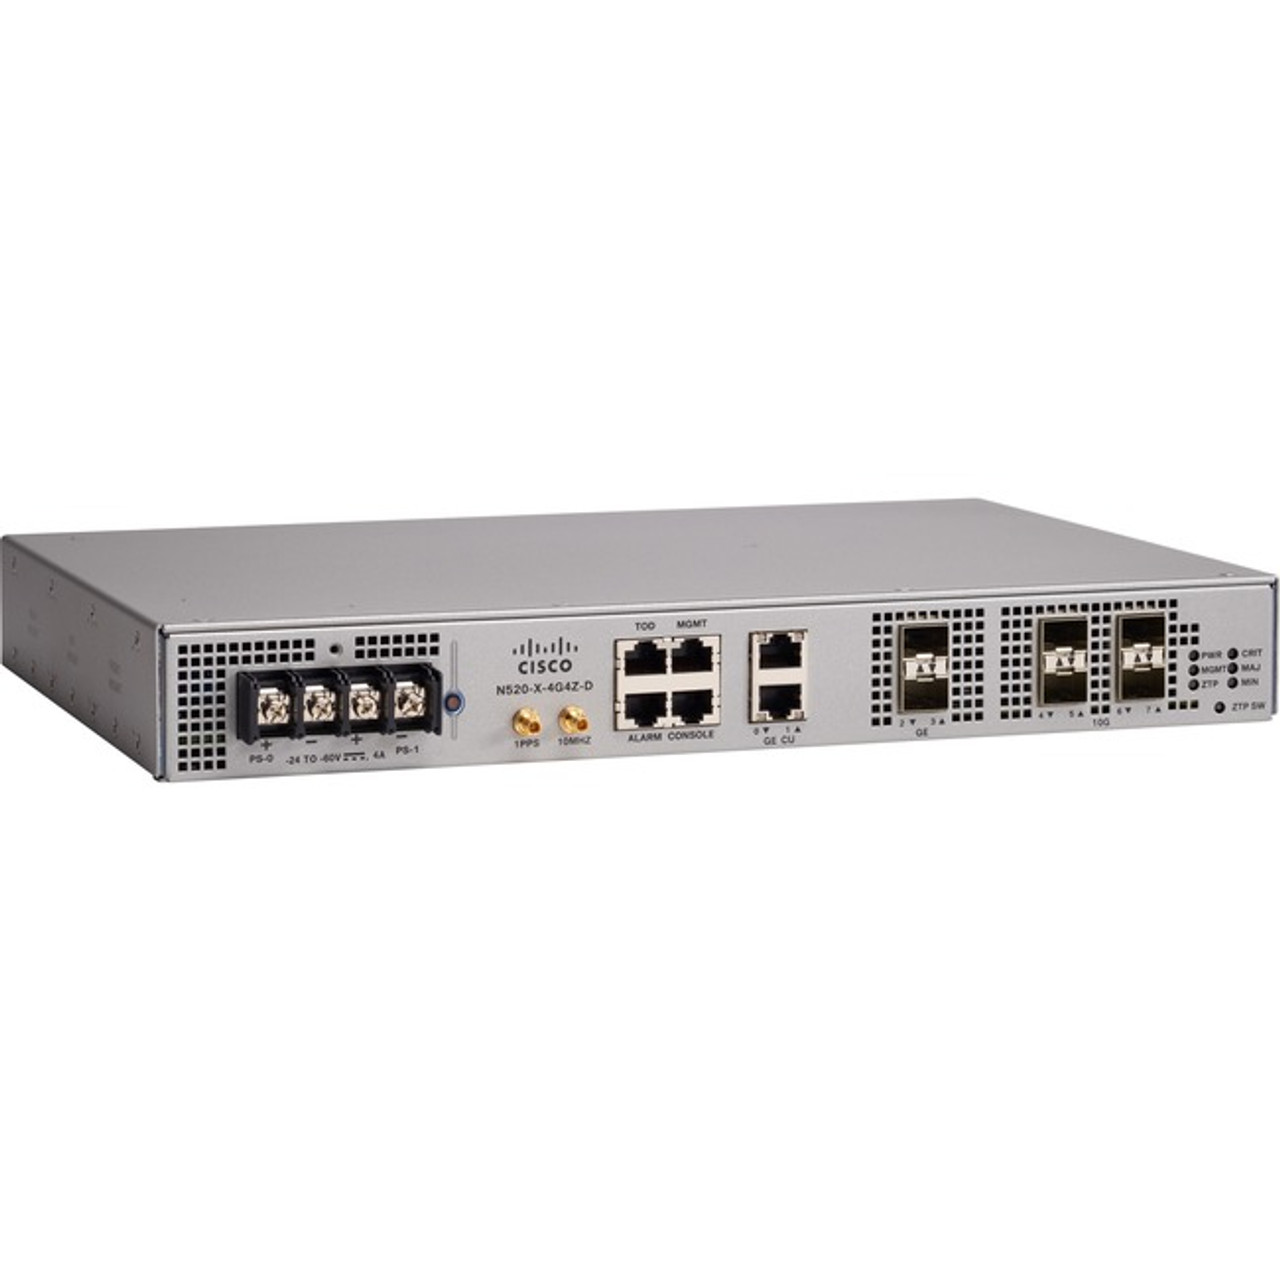 Cisco N520-X-4G4Z-D